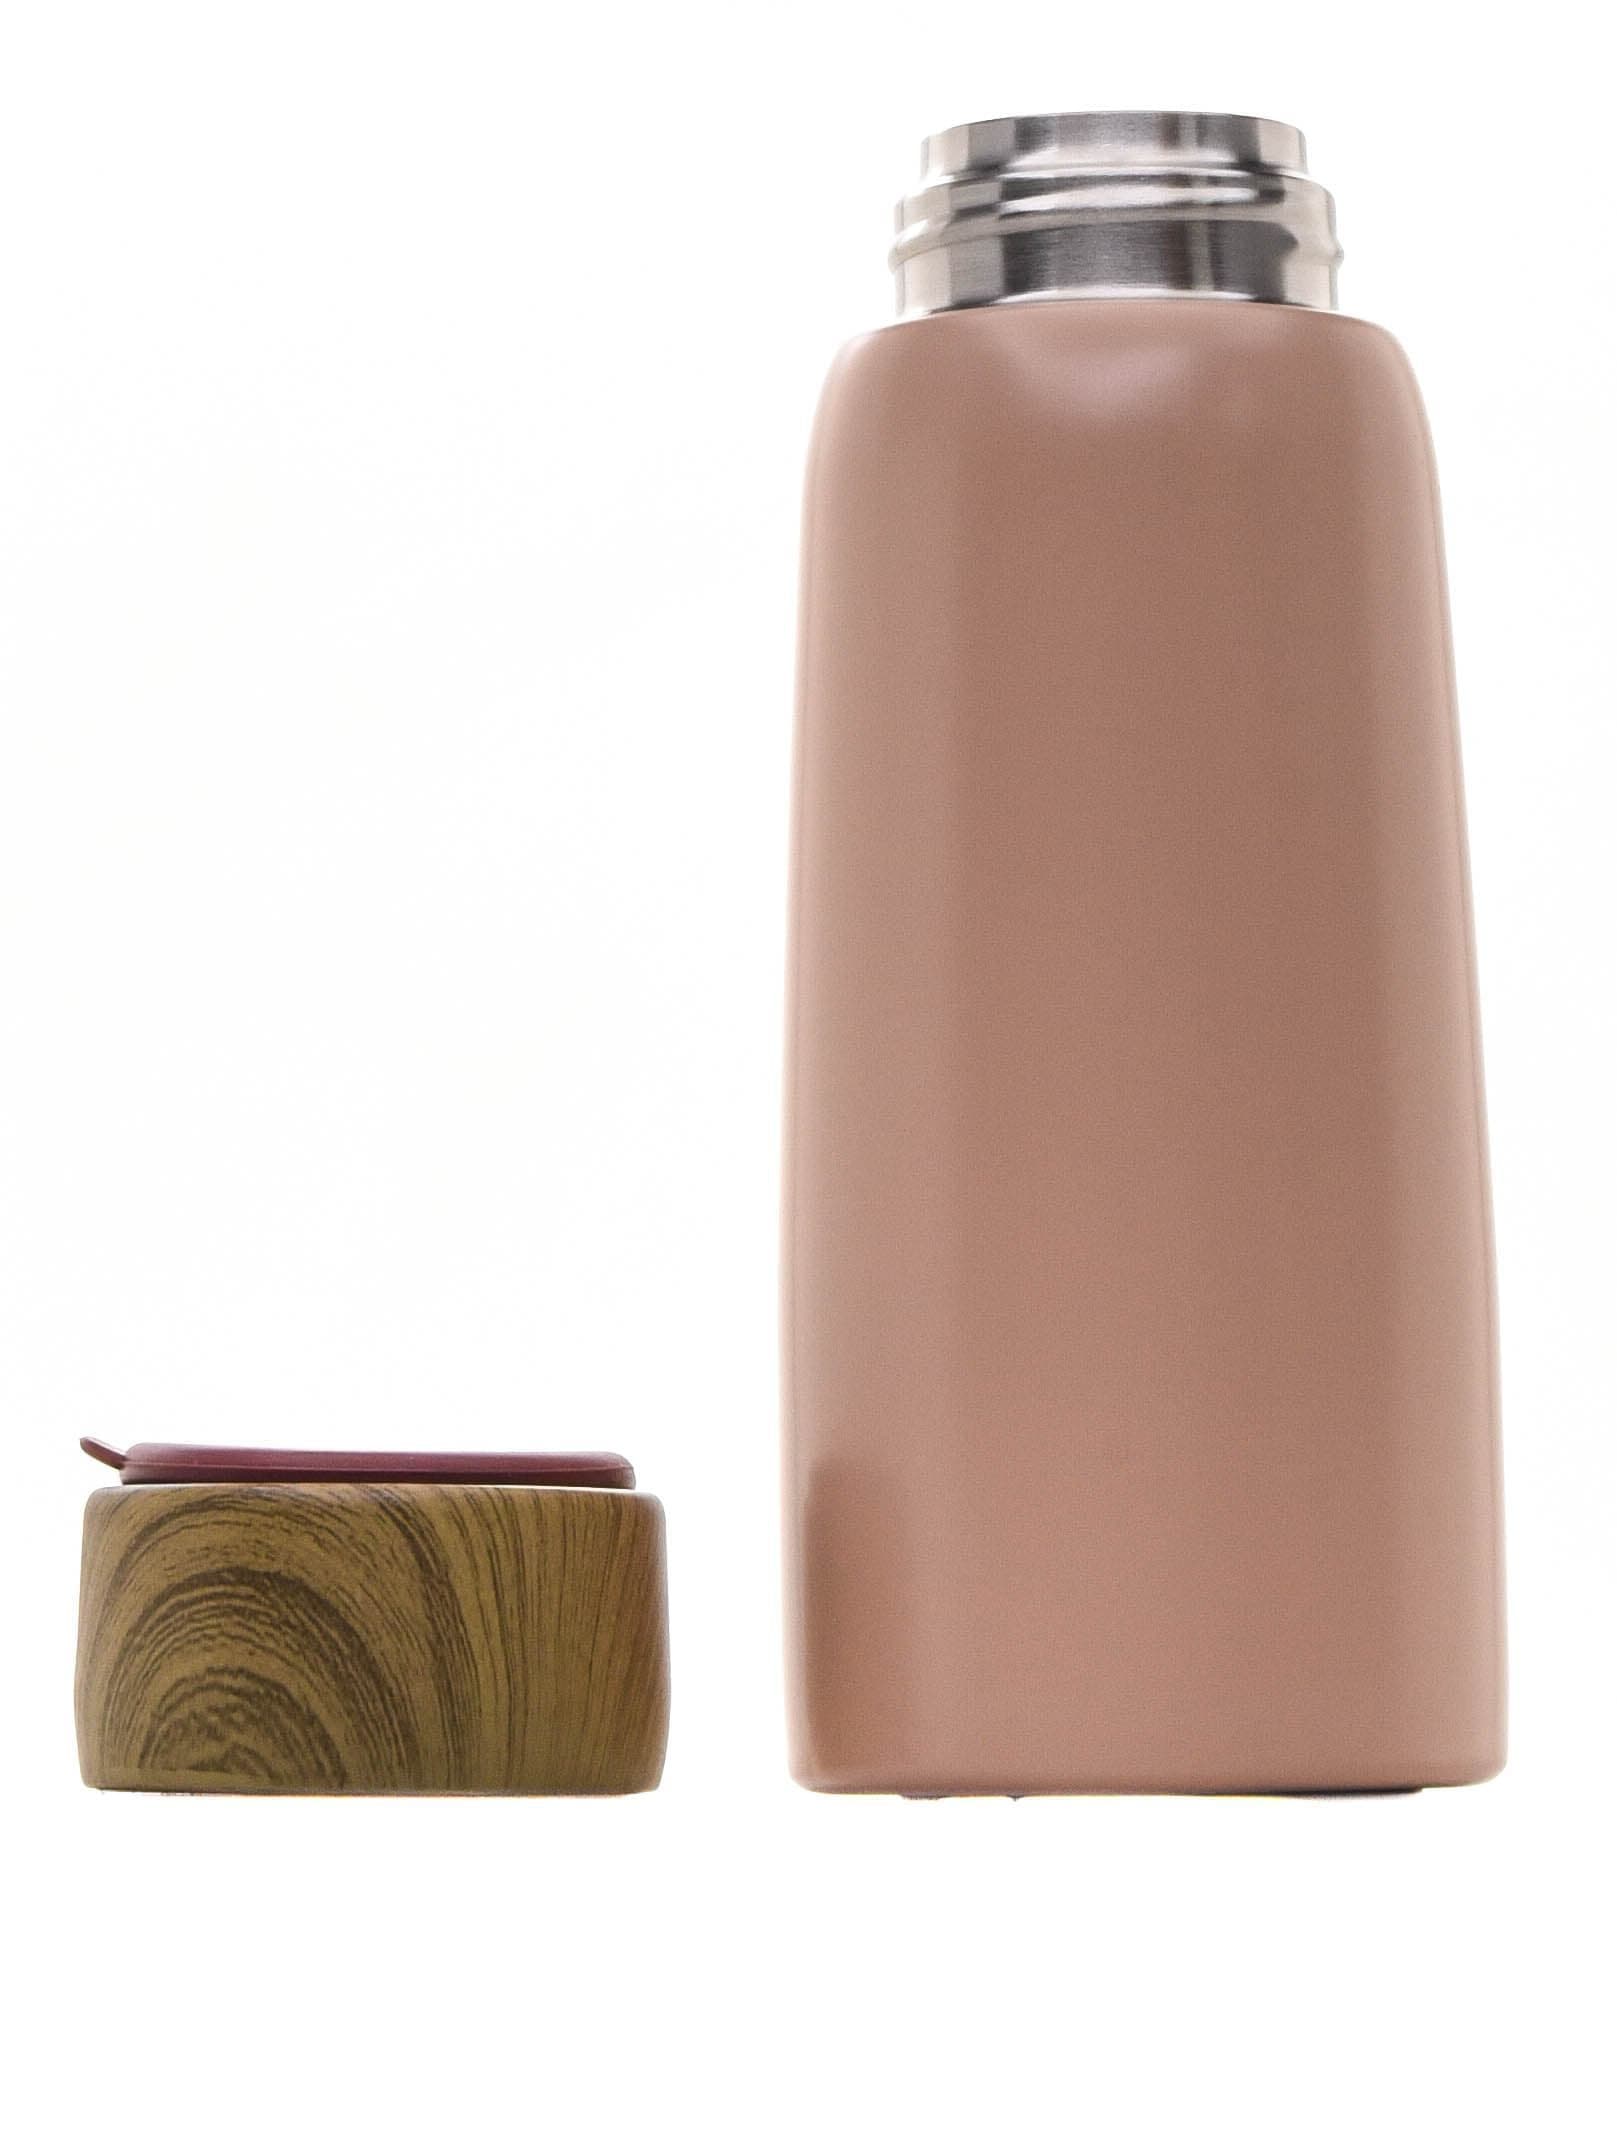 Термобутылка для воды Diller 8772 350 ml (Светло-розовый) фото